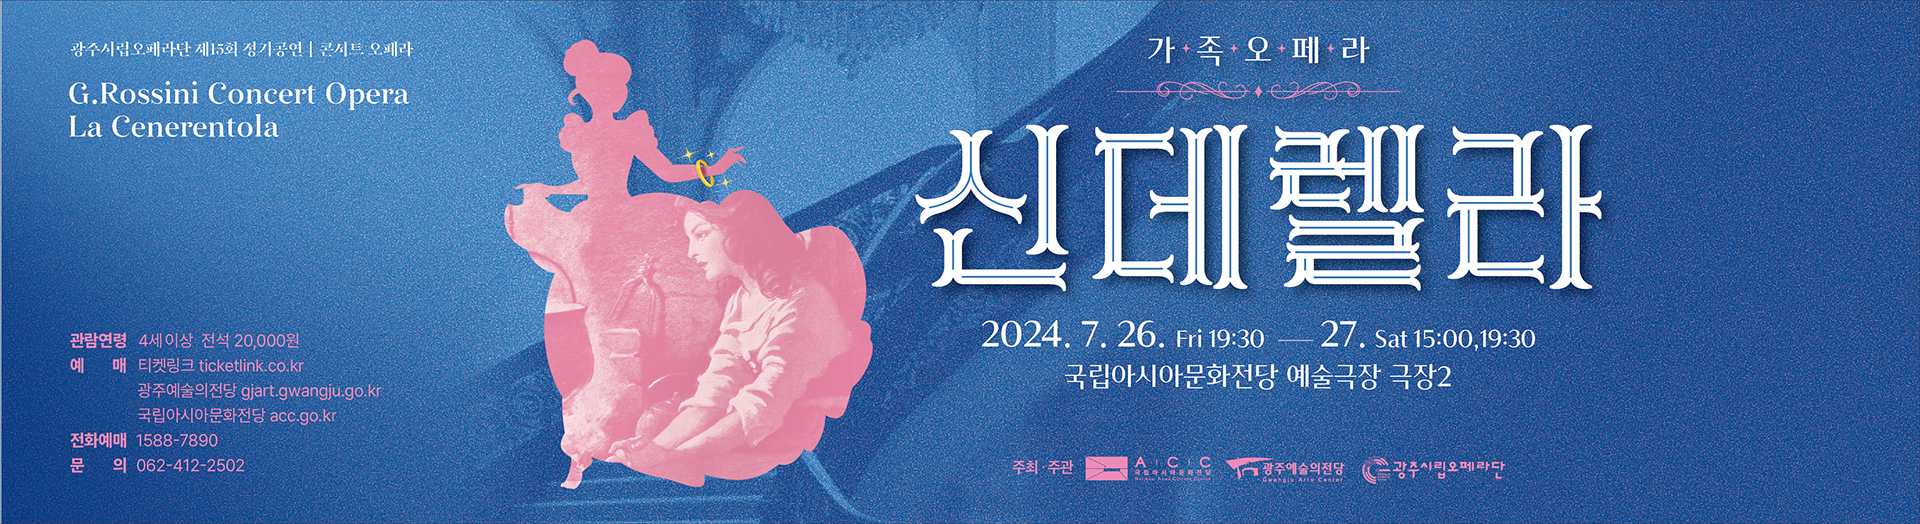 Gwangju Metropolitan Opera’s 15th Regular Performance Family Opera “Cinderella”